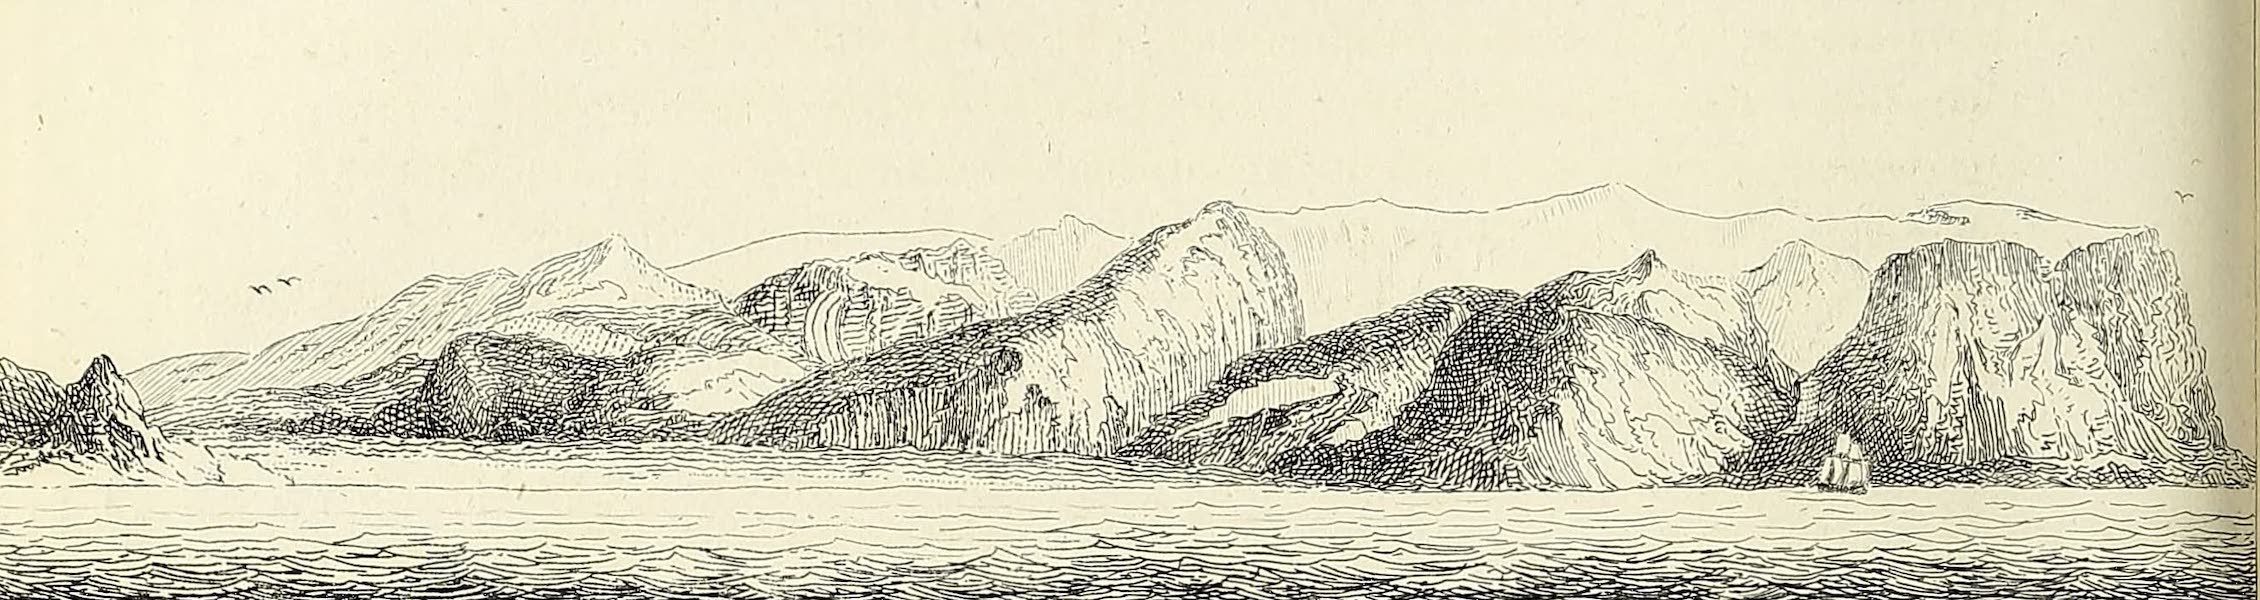 Possession Bay to Cape Fanshawe N. 86&176; W.